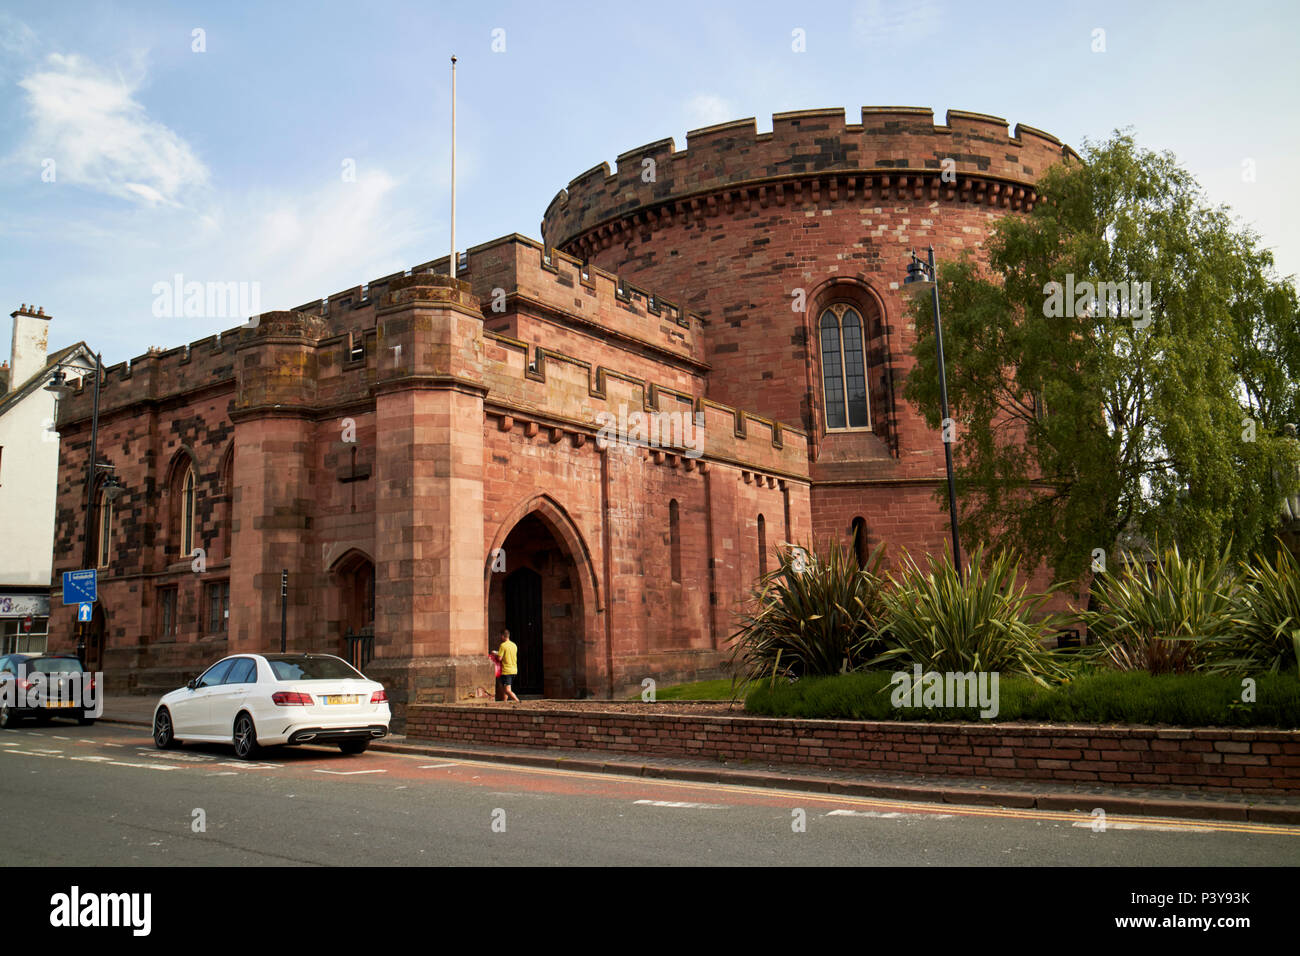 Nisi prius courthouse the citadel east tower Carlisle Cumbria England UK Stock Photo